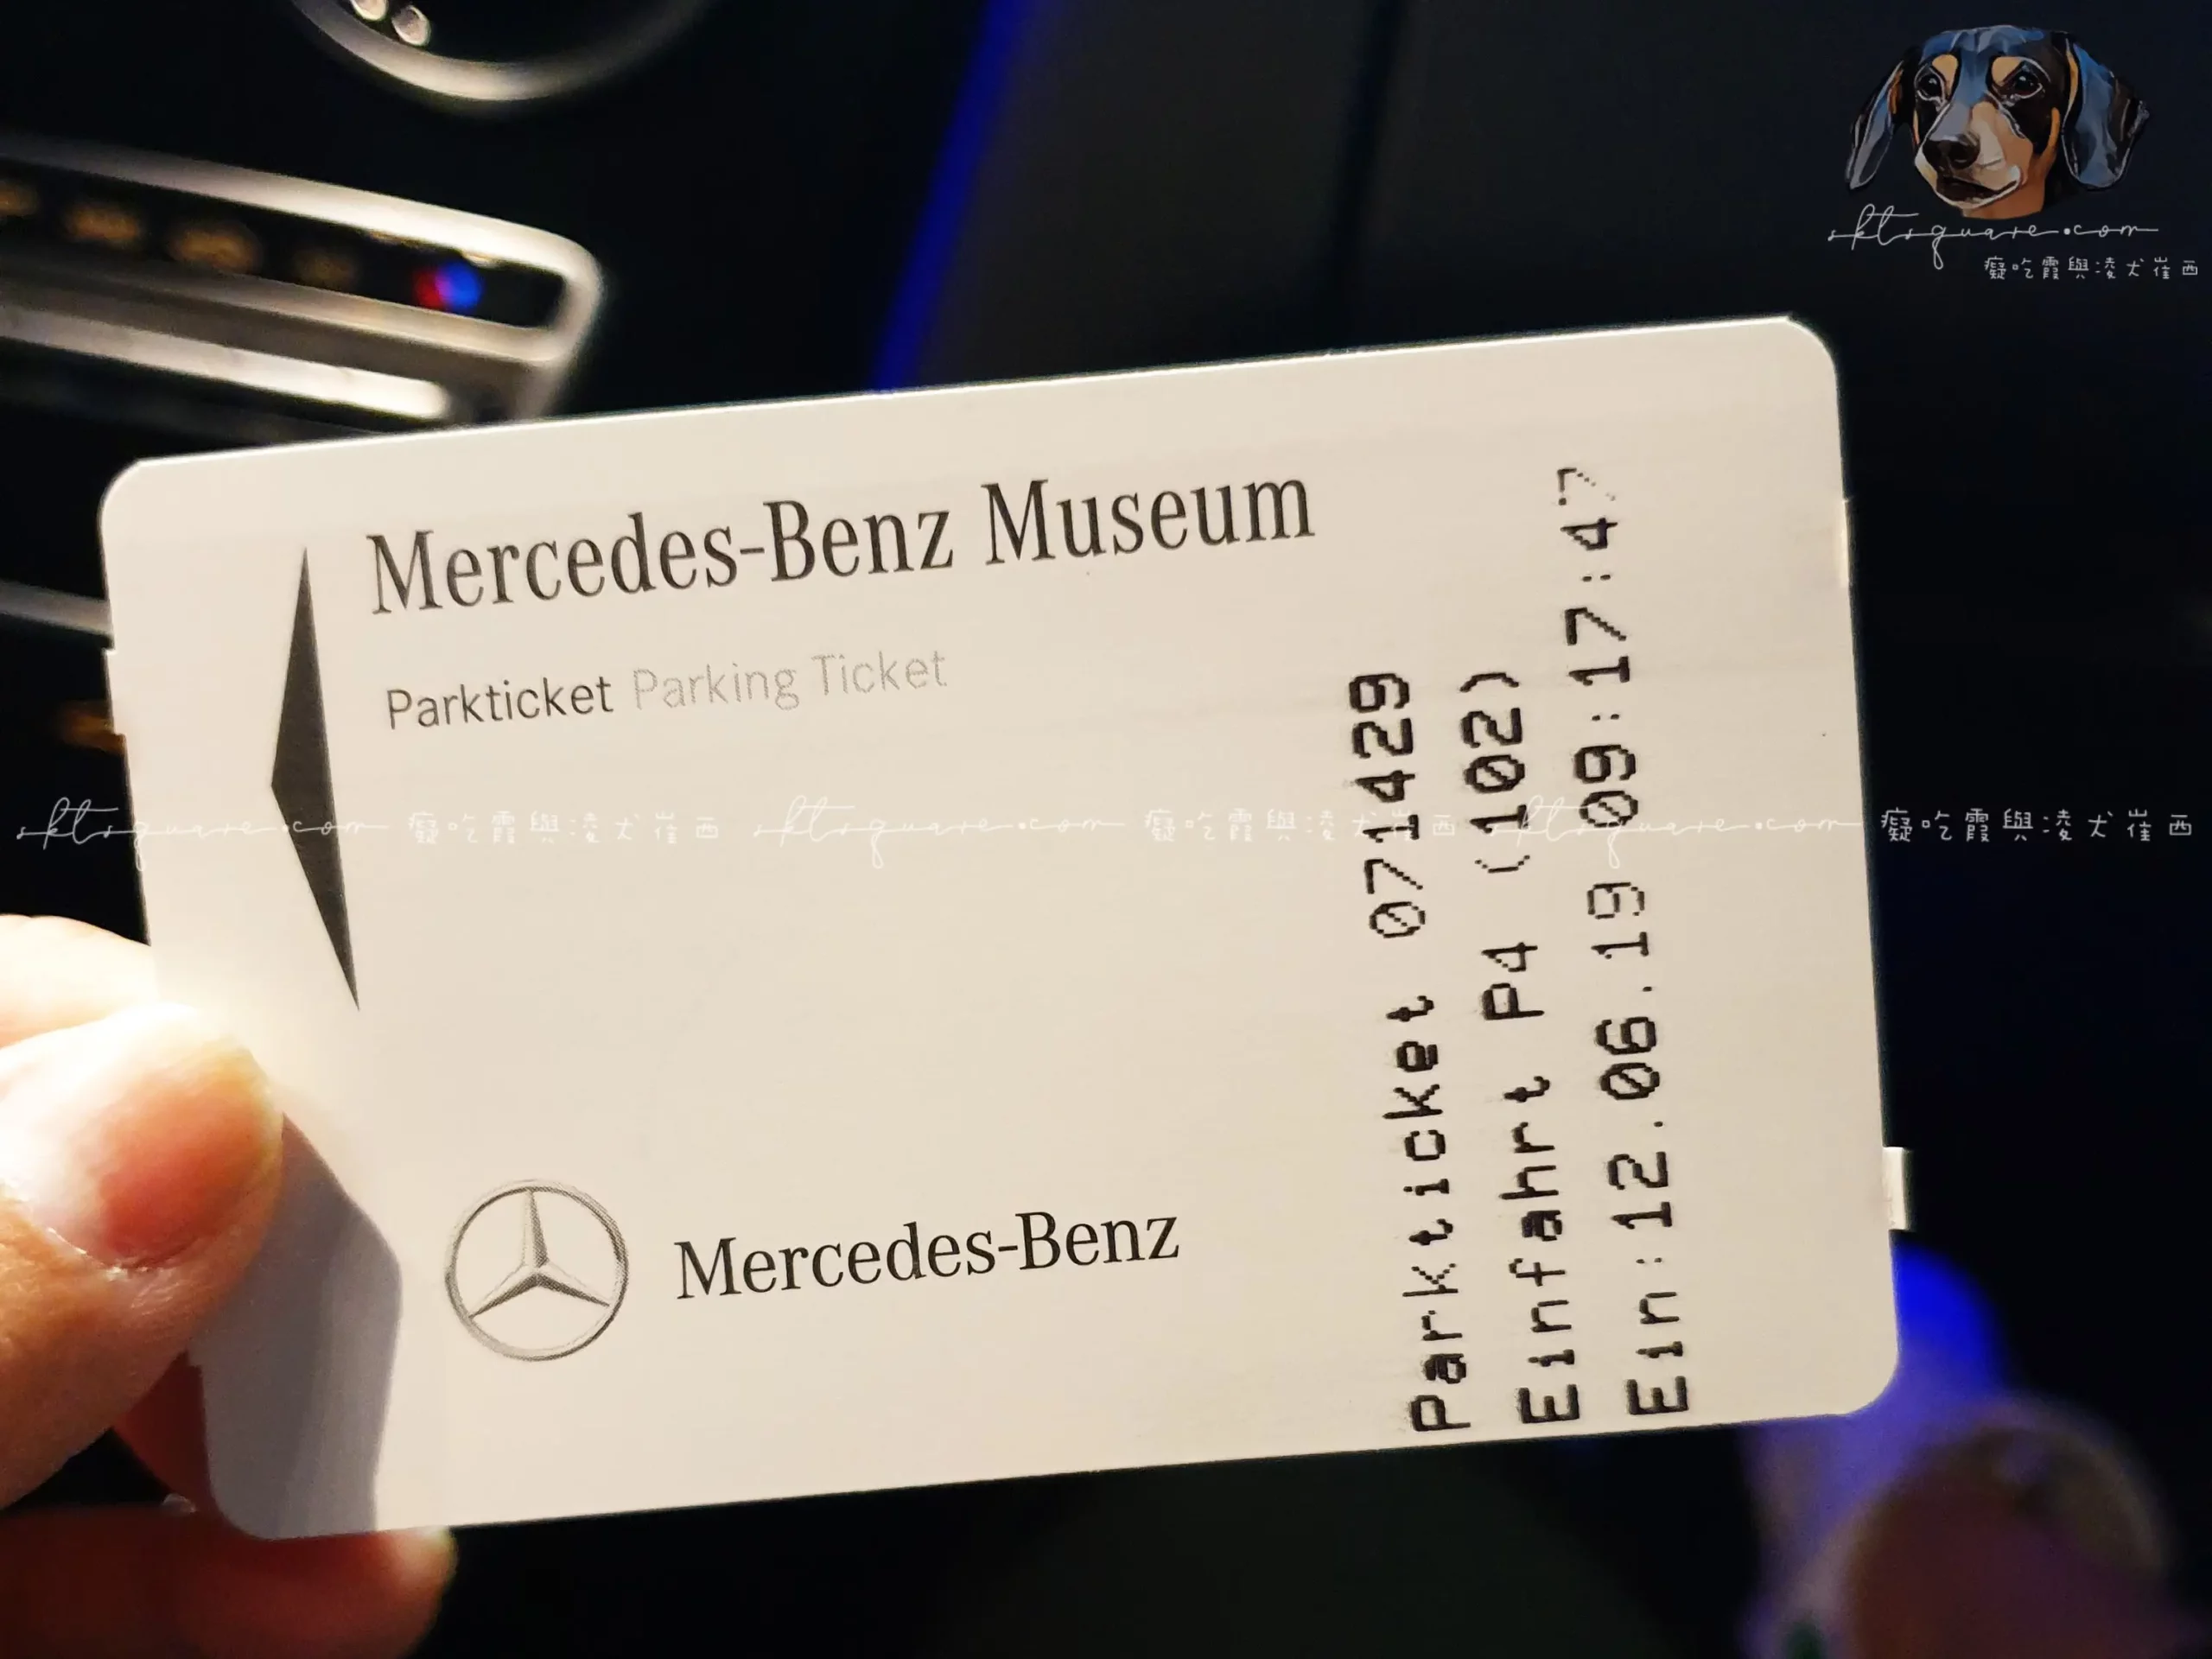 賓士博物館 斯圖加特 germany stuttgart mercedes benz museum 20190612 092129 1 浮水 scaled